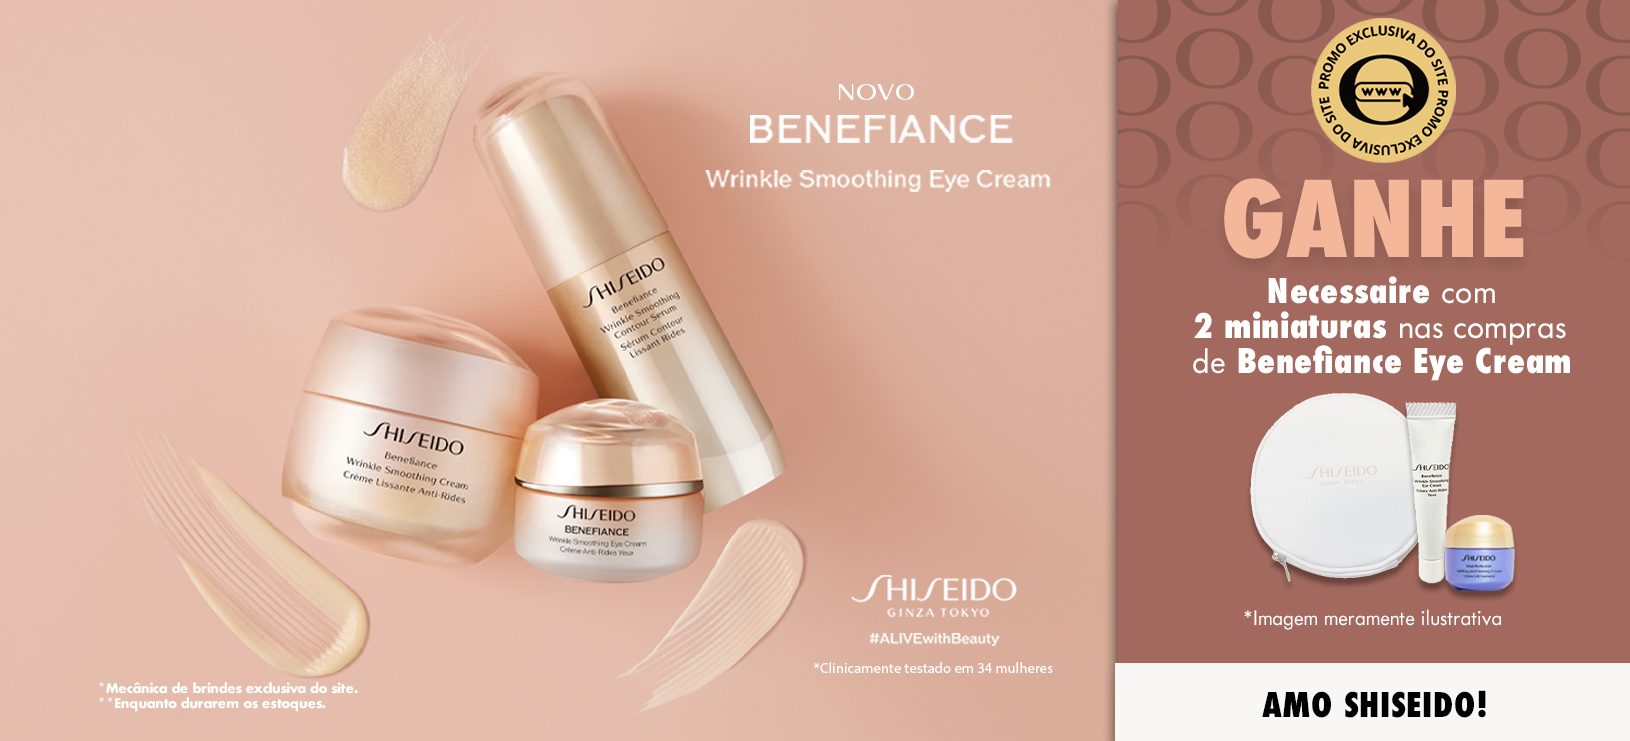 shiseido-benefiance-eye-cream-banner-desktop